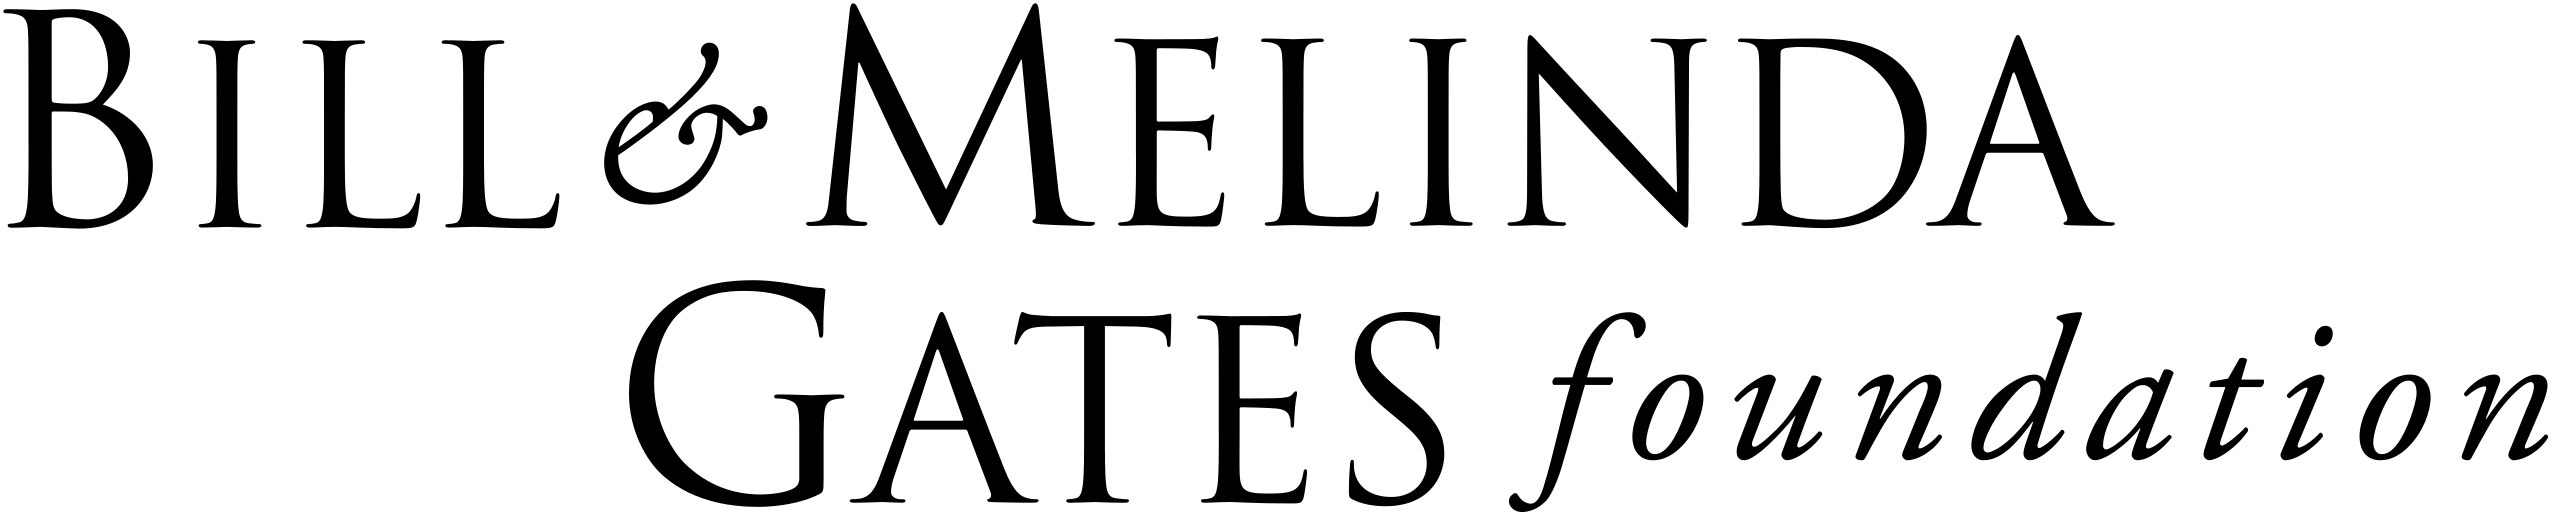 Bill__Melinda_Gates_Foundation_logo.svg-1